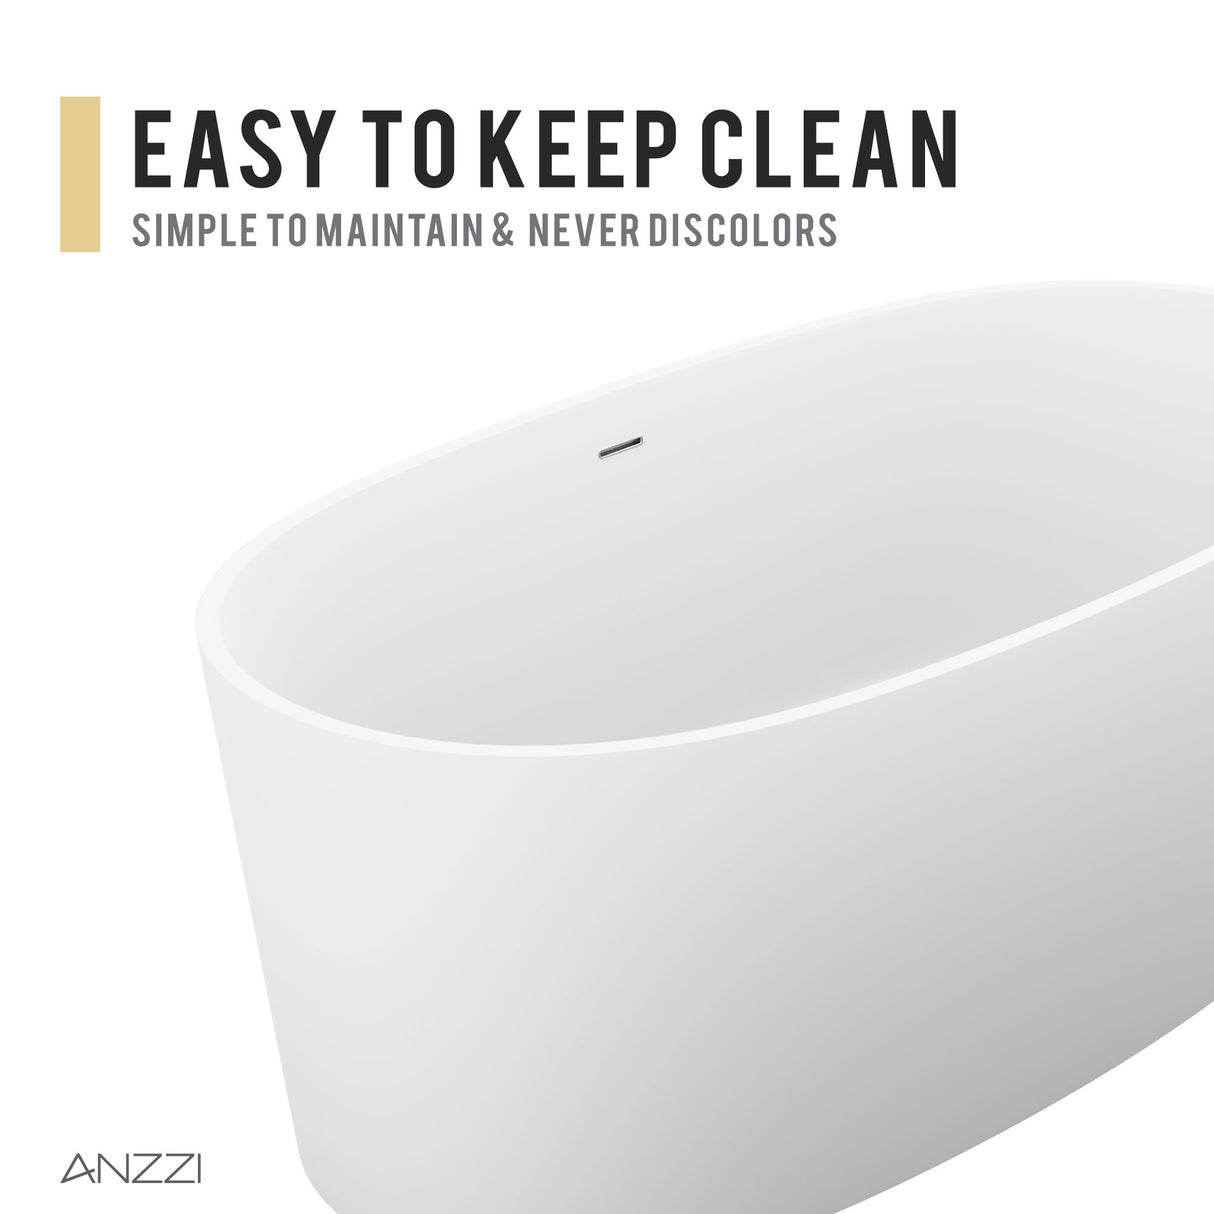 ANZZI FT-AZ8416 Bellentin 5.1 ft. Solid Surface Center Drain Freestanding Bathtub in Matte White